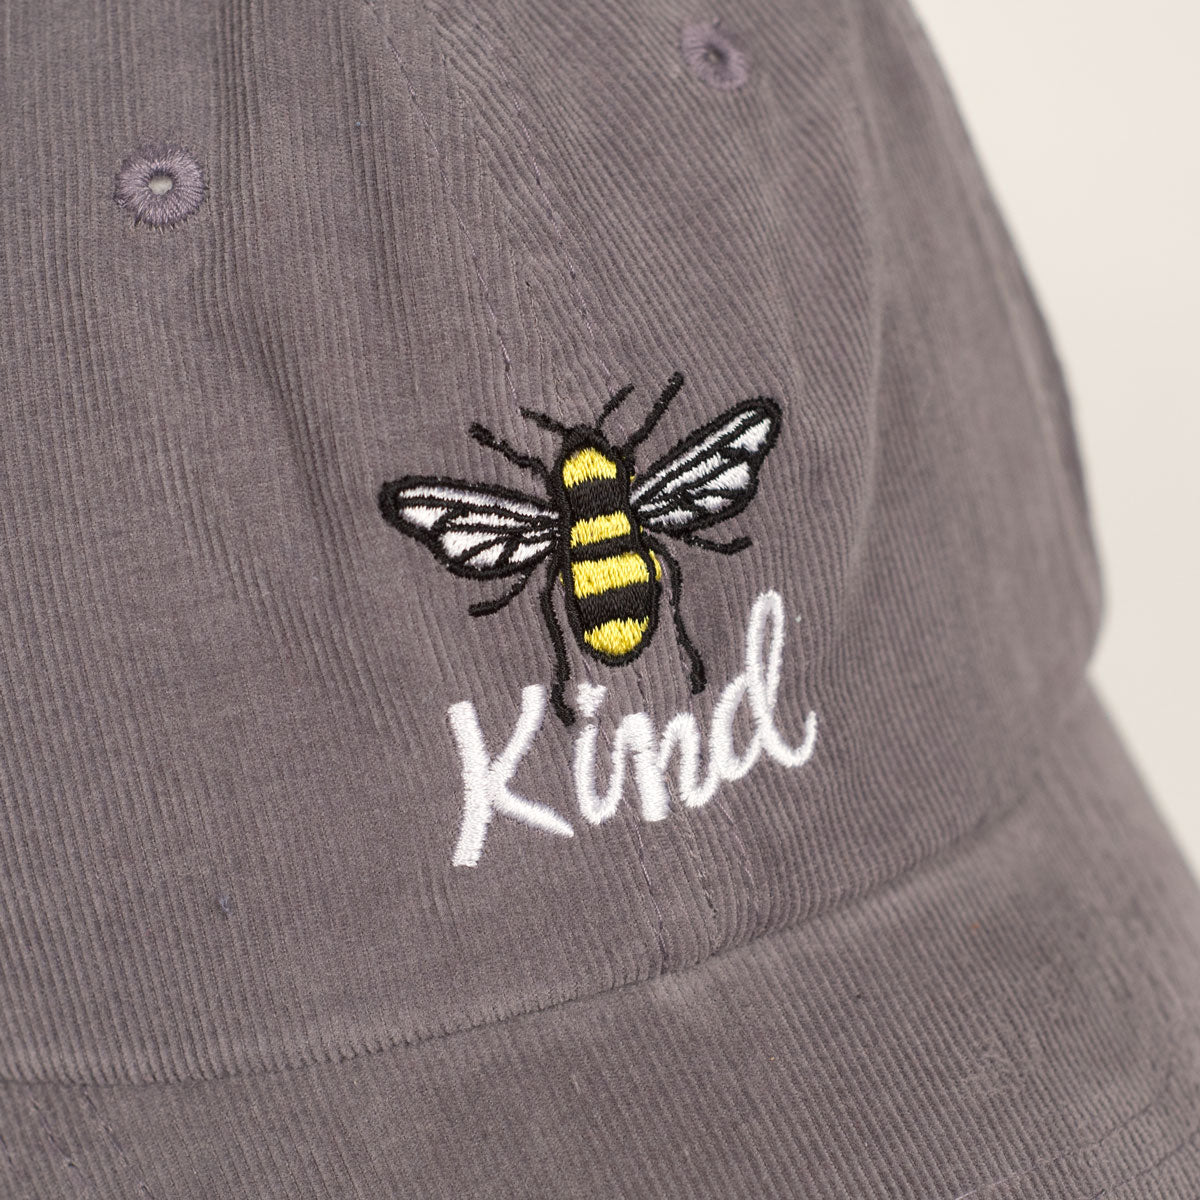 Bee Kind Corduroy Hat